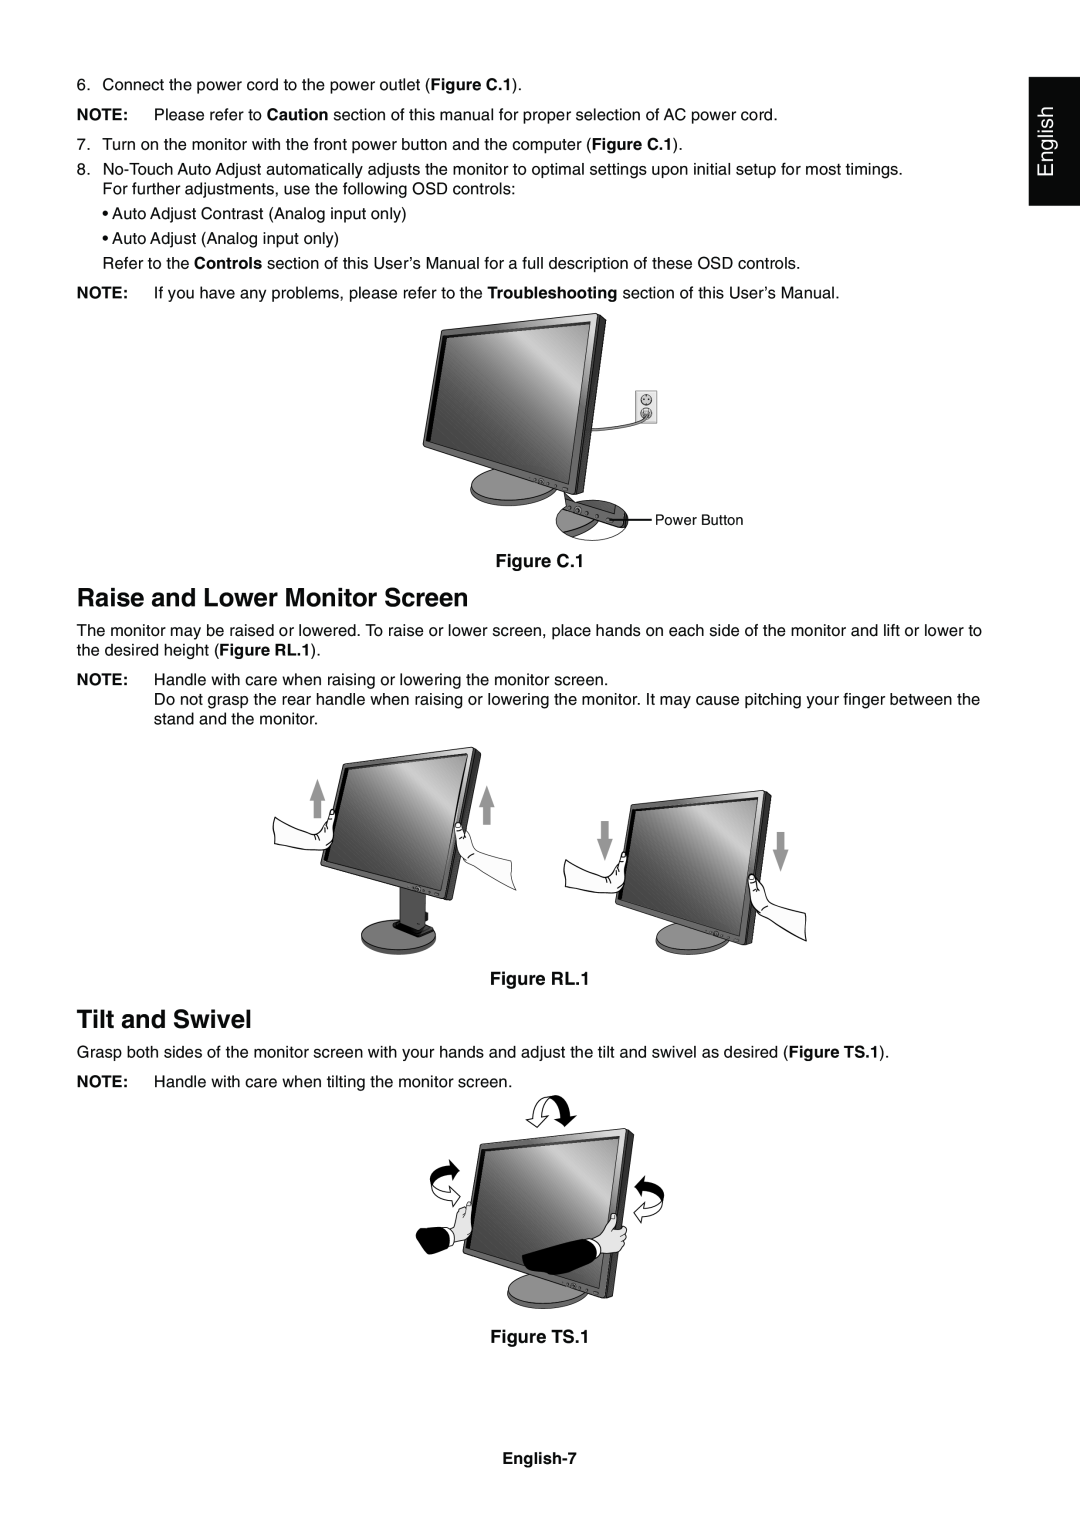 NEC E231W-BK user manual Raise and Lower Monitor Screen, Tilt and Swivel, English, Figure C.1, Figure RL.1, Figure TS.1 